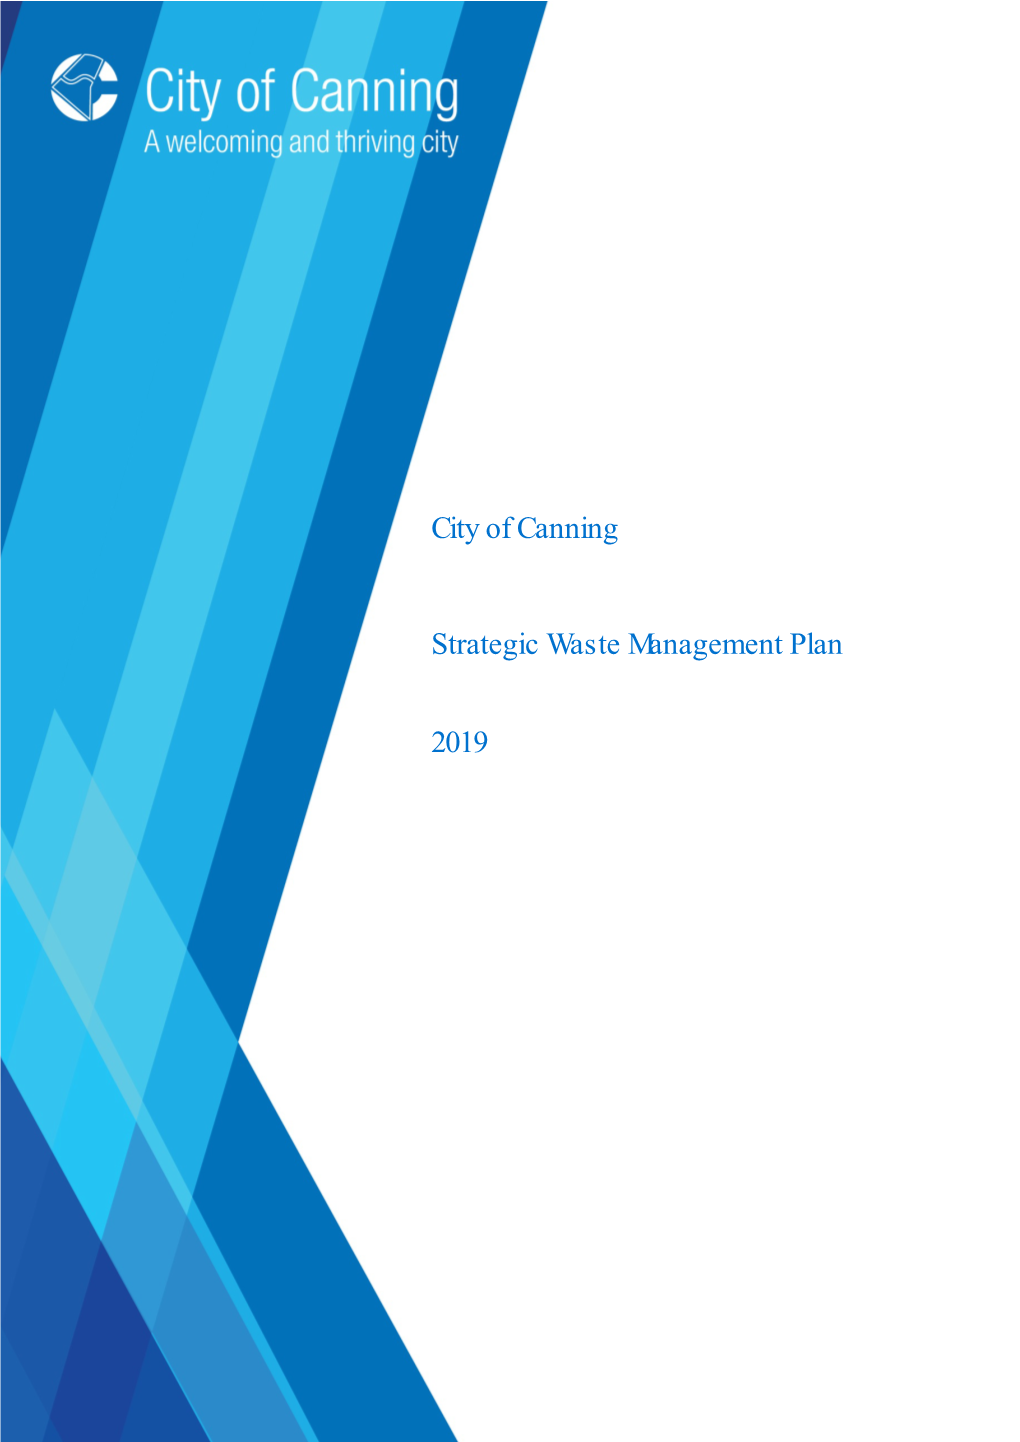 City of Canning Strategic Waste Management Plan 2019